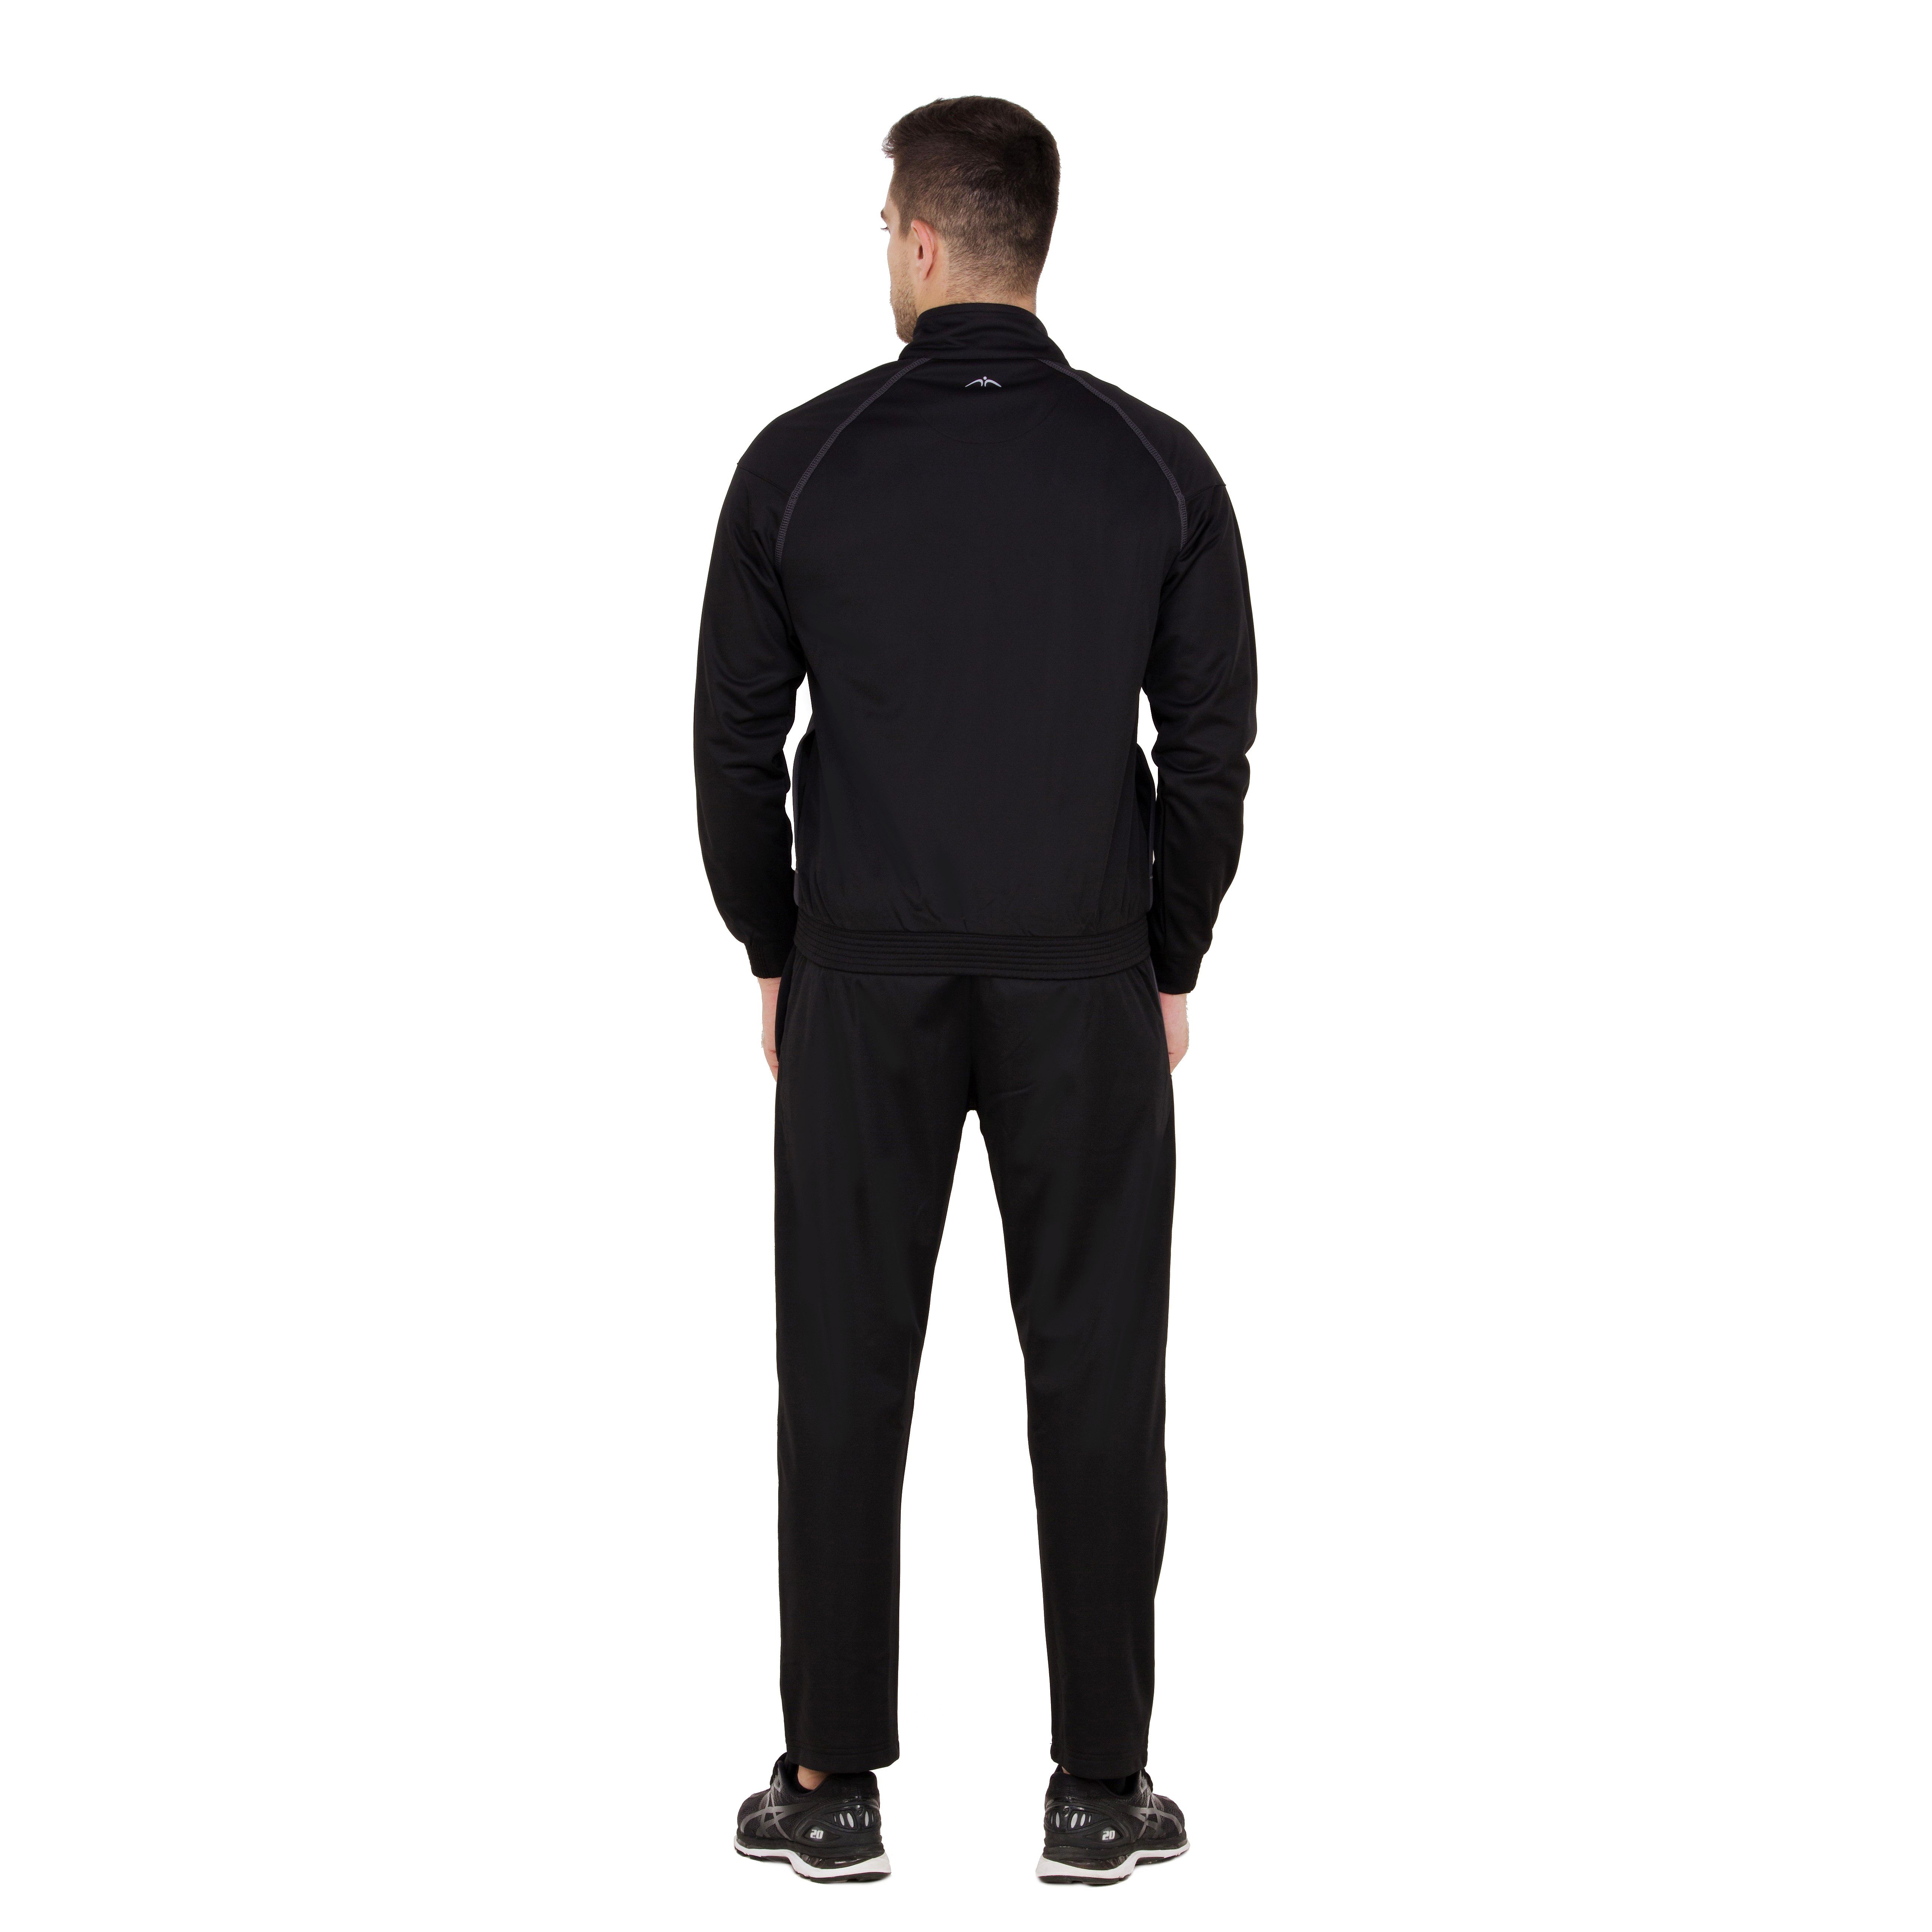 DIDA Sportswear Men's Track Suit - Buy DIDA Sportswear Men's Track Suit ...